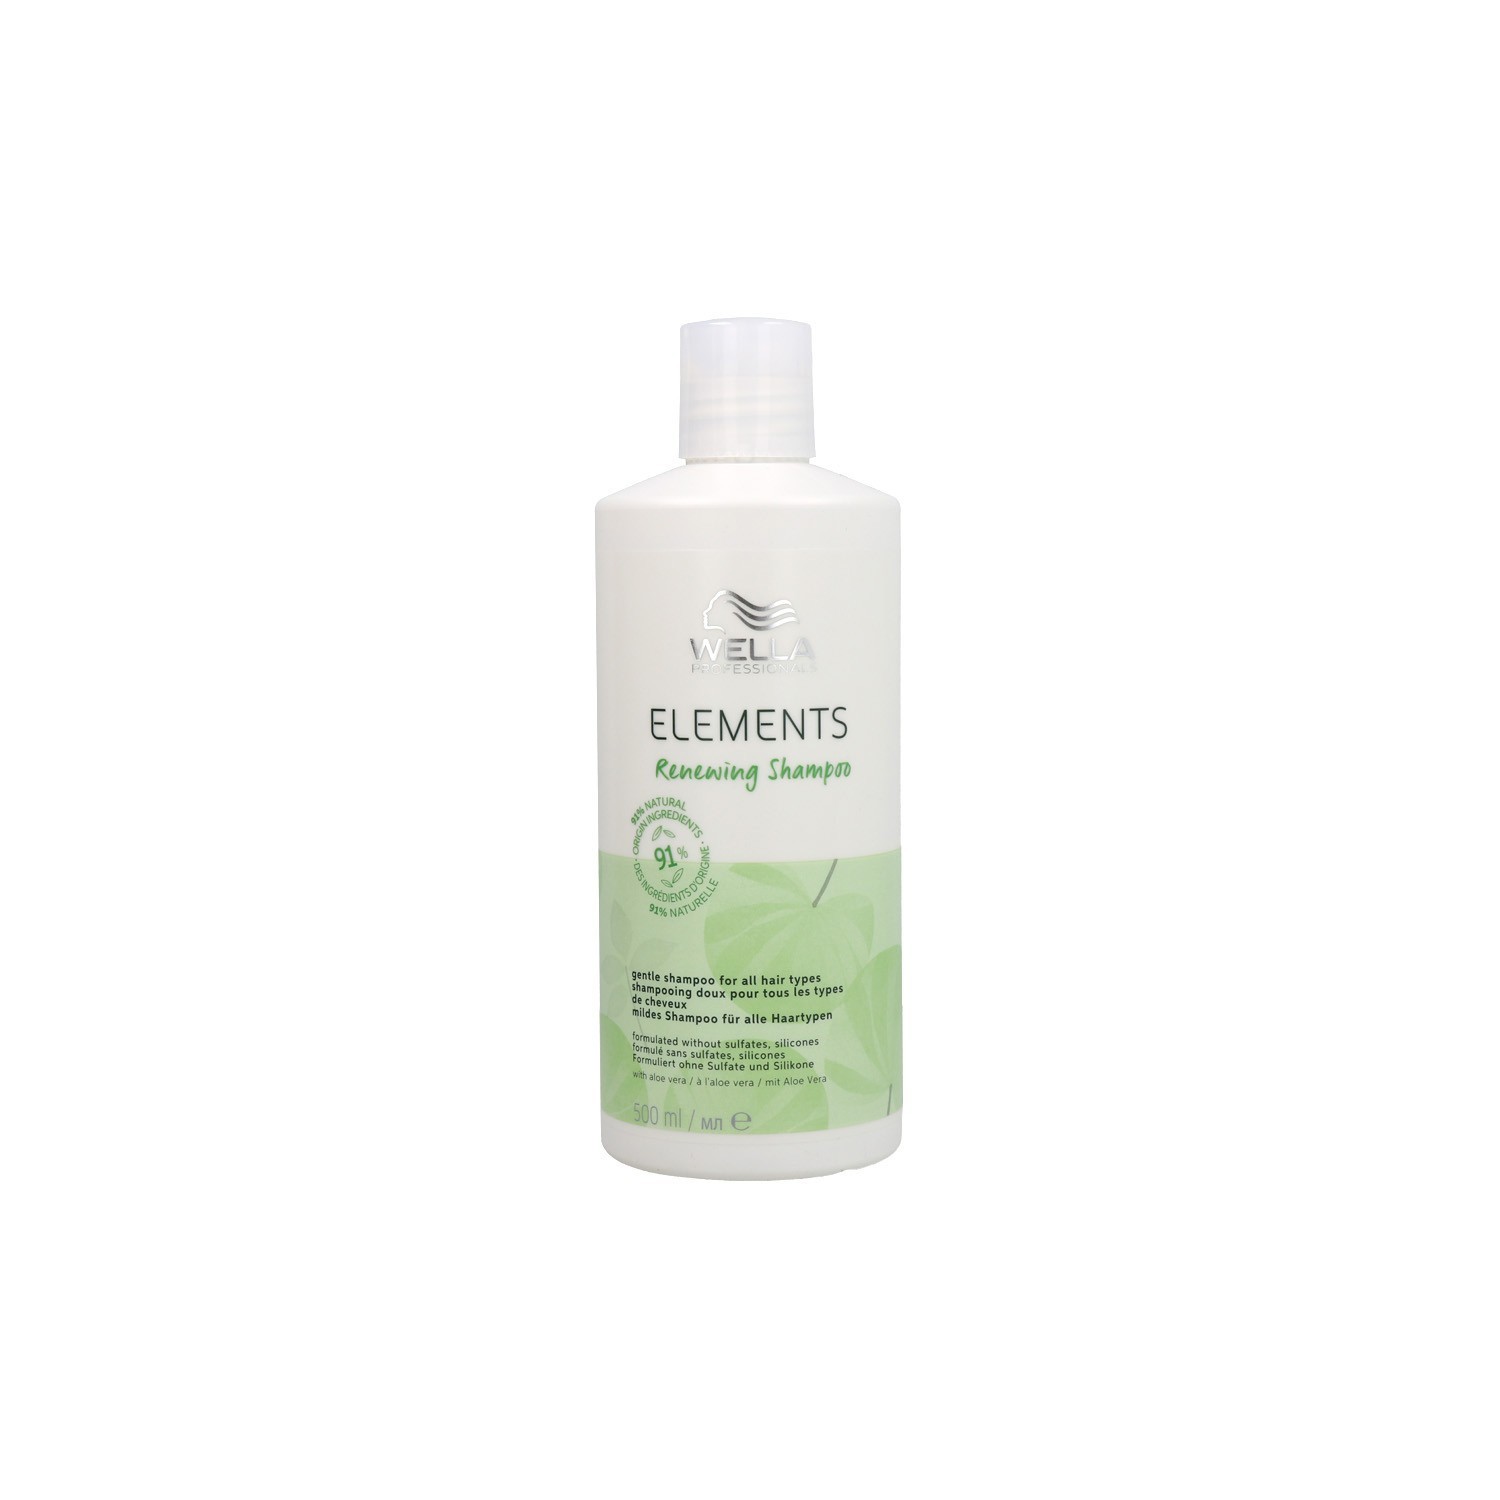 Wella Elements Renewing Shampoo 500 ml